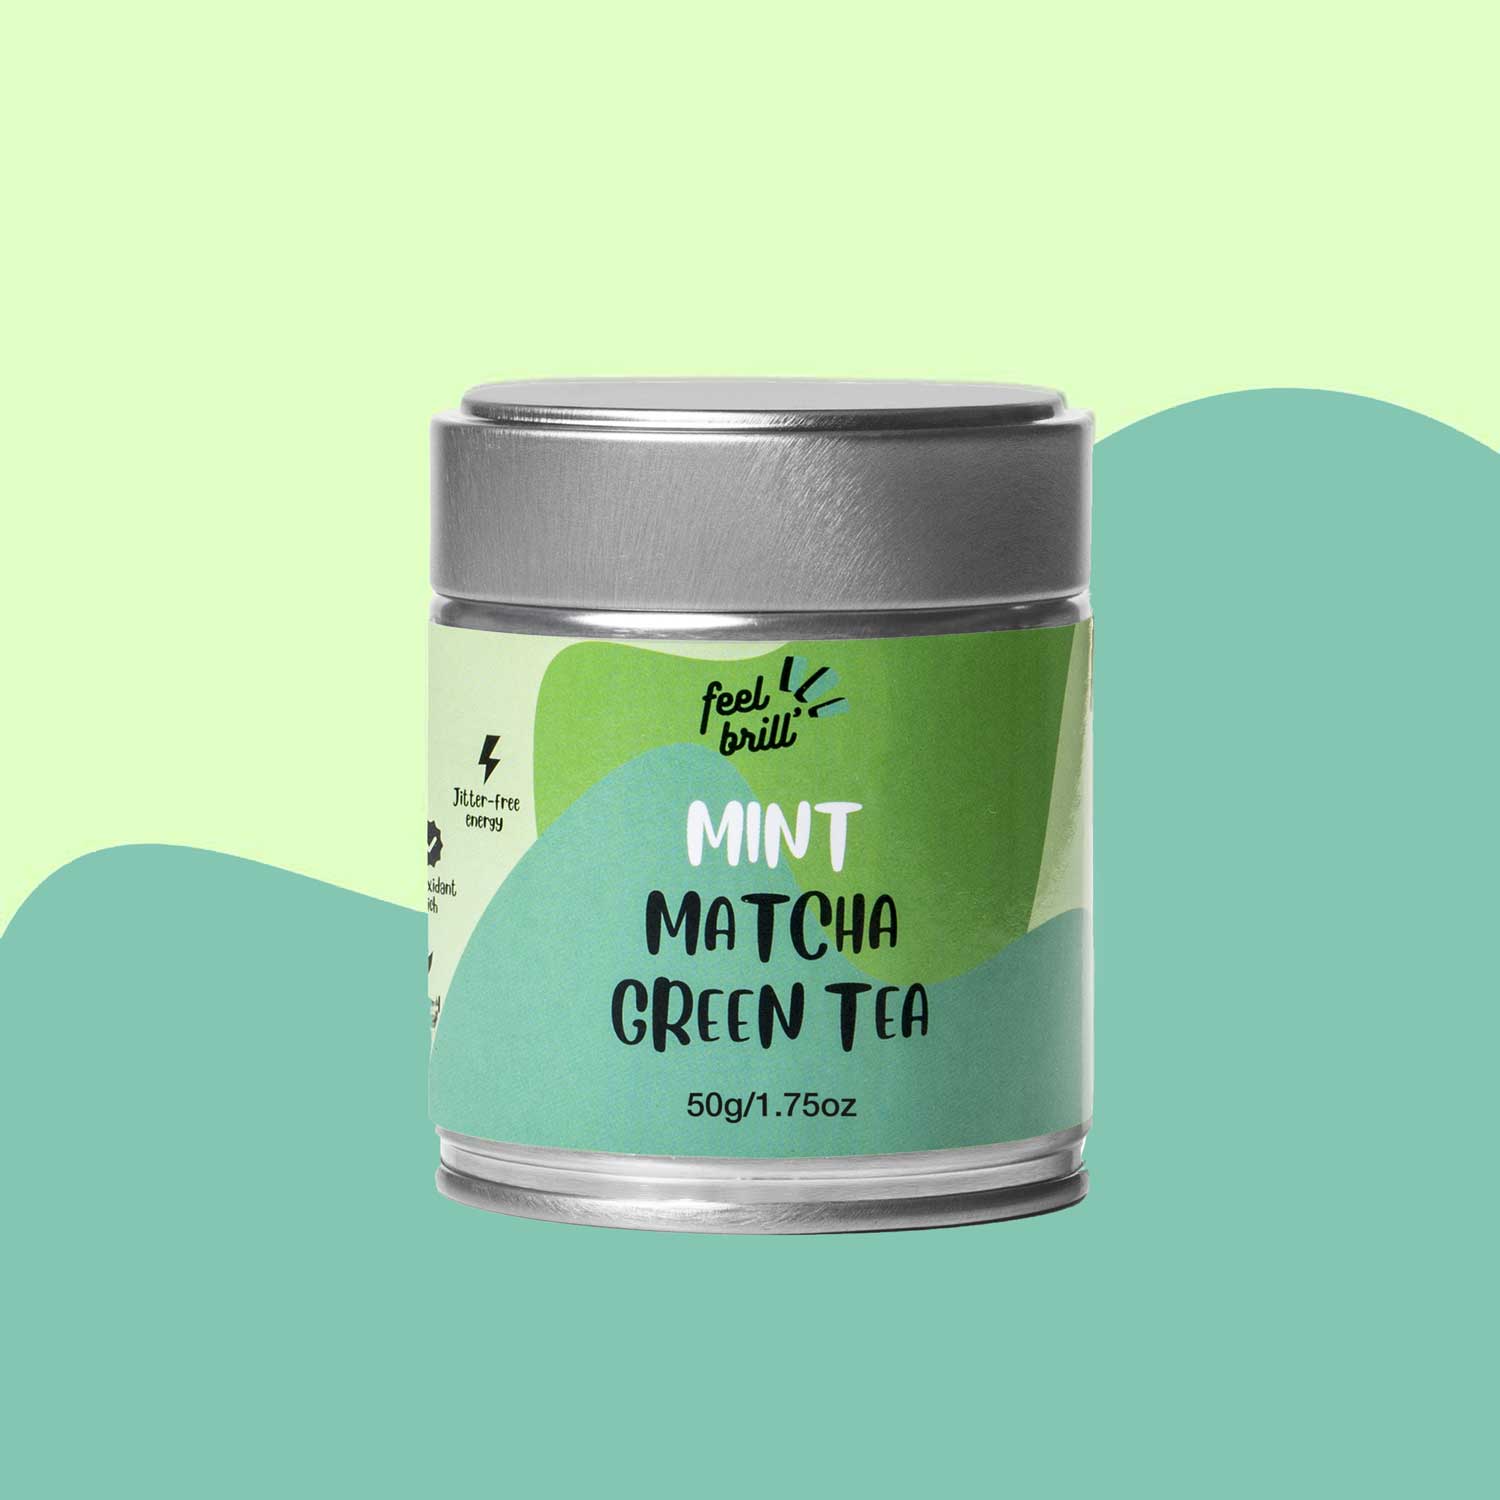 Matcha arbata su meta - matcha with mint - feel brill